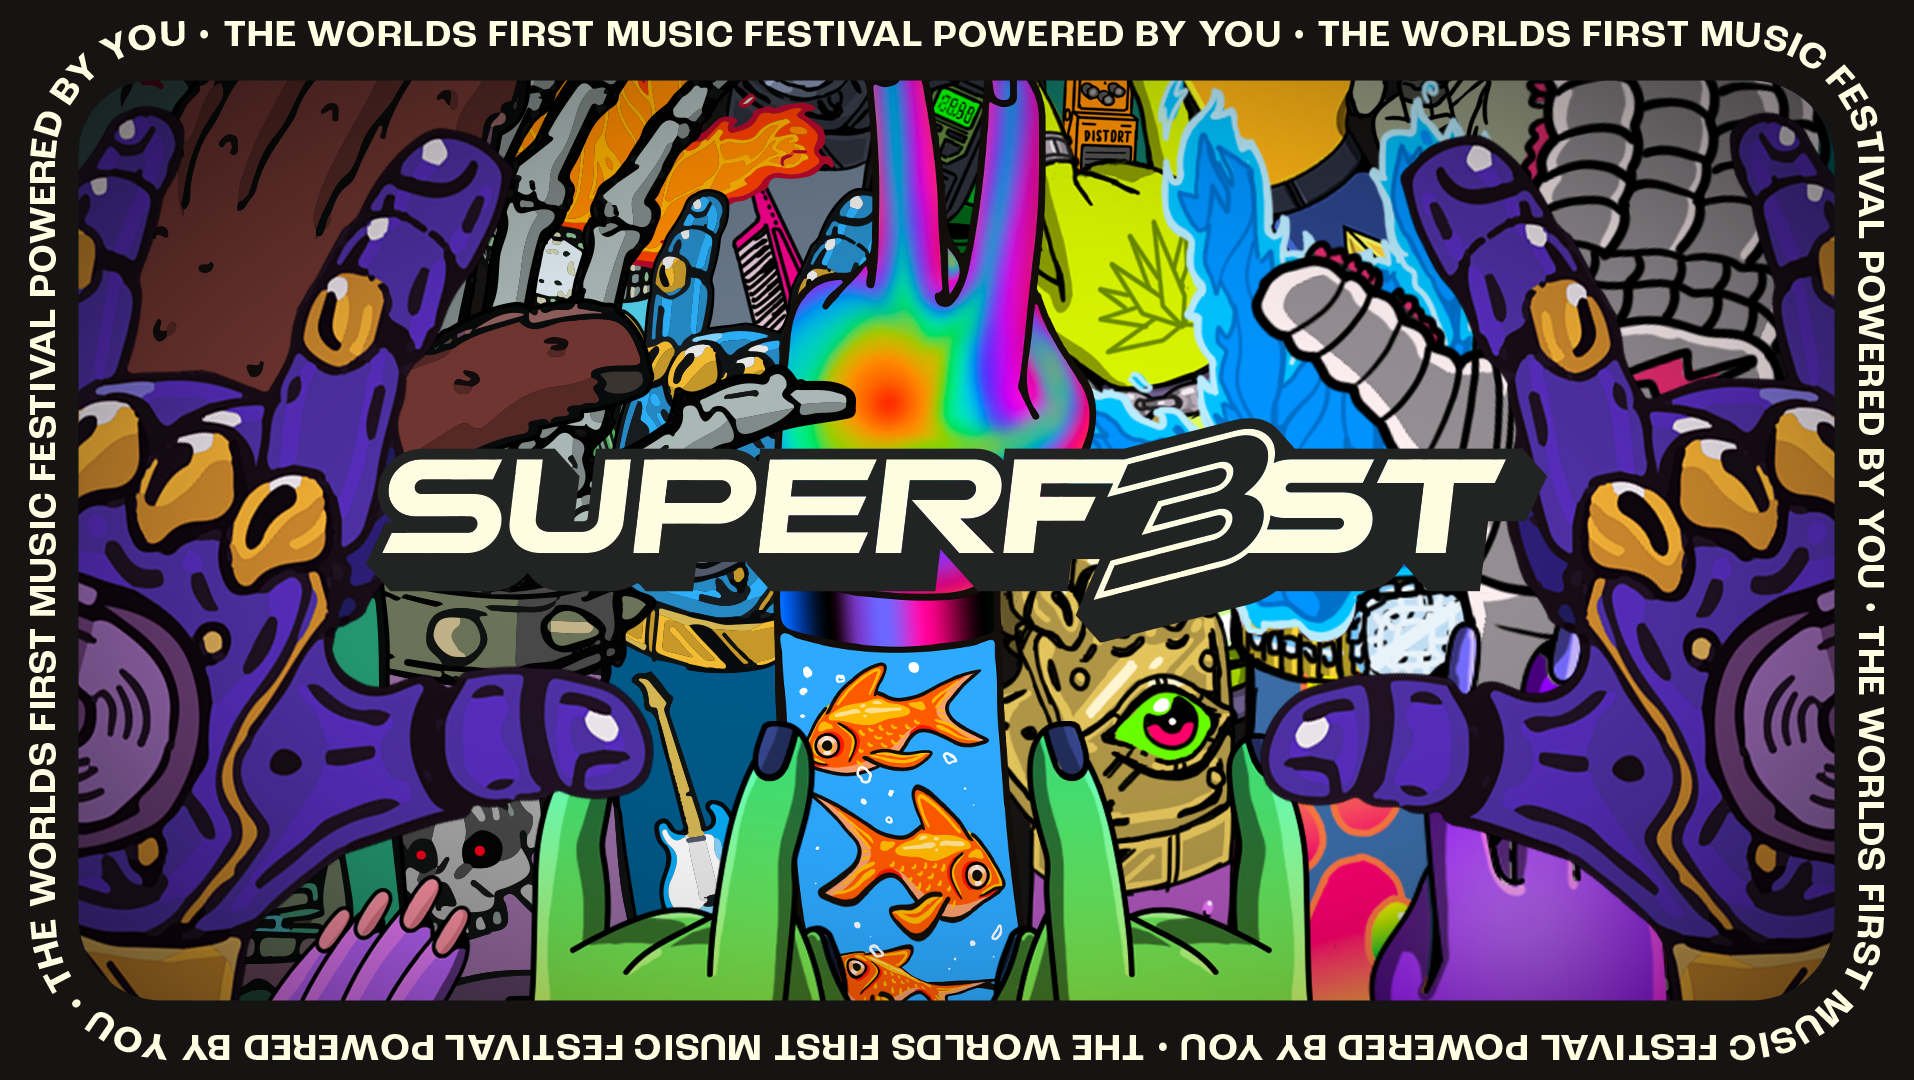 Superfest logo